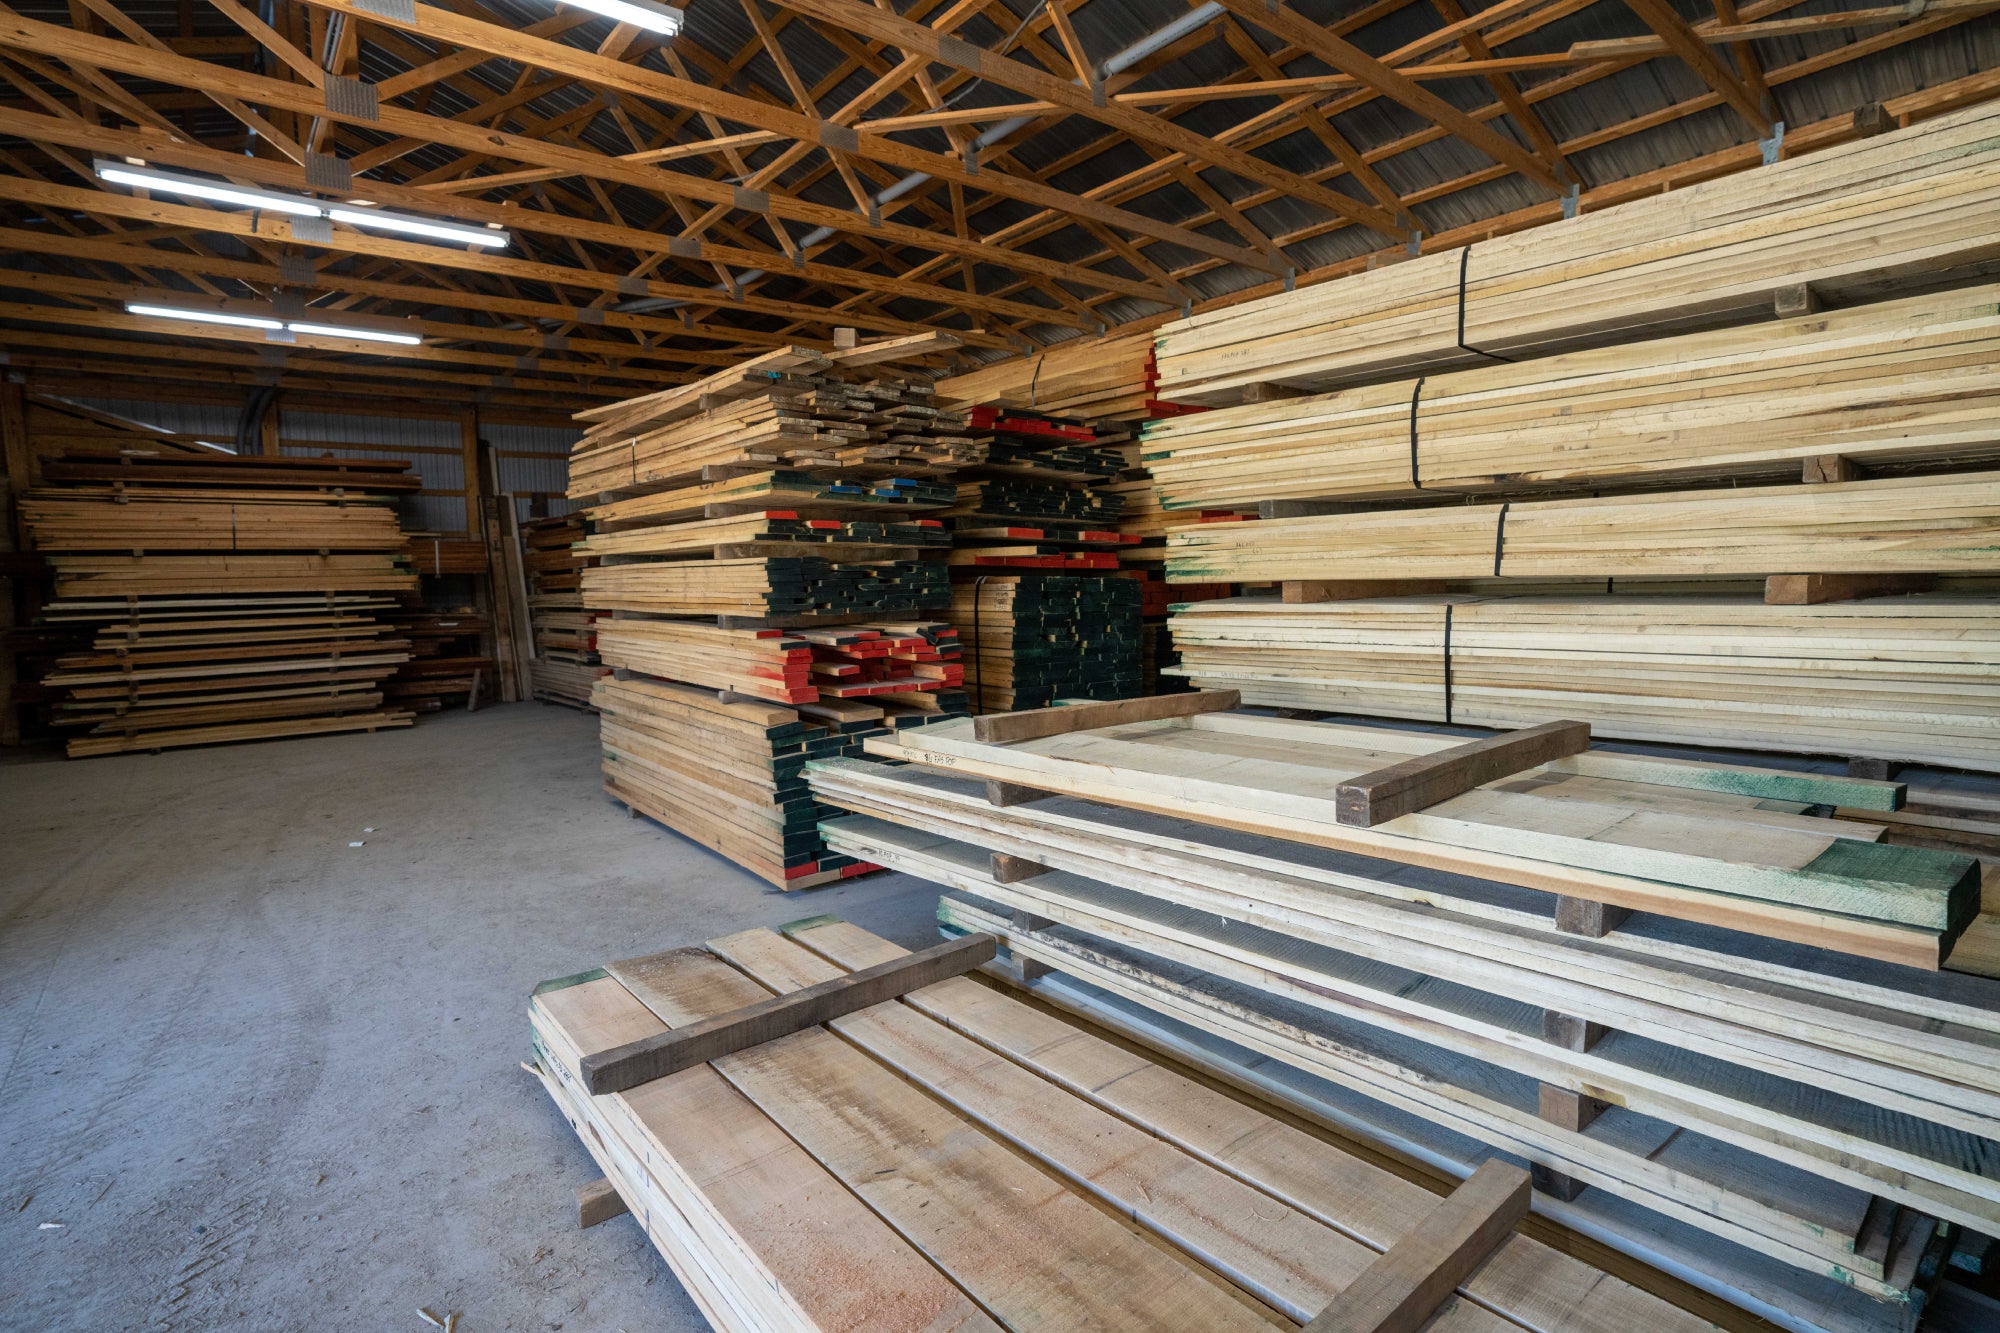 Hardwood Boards